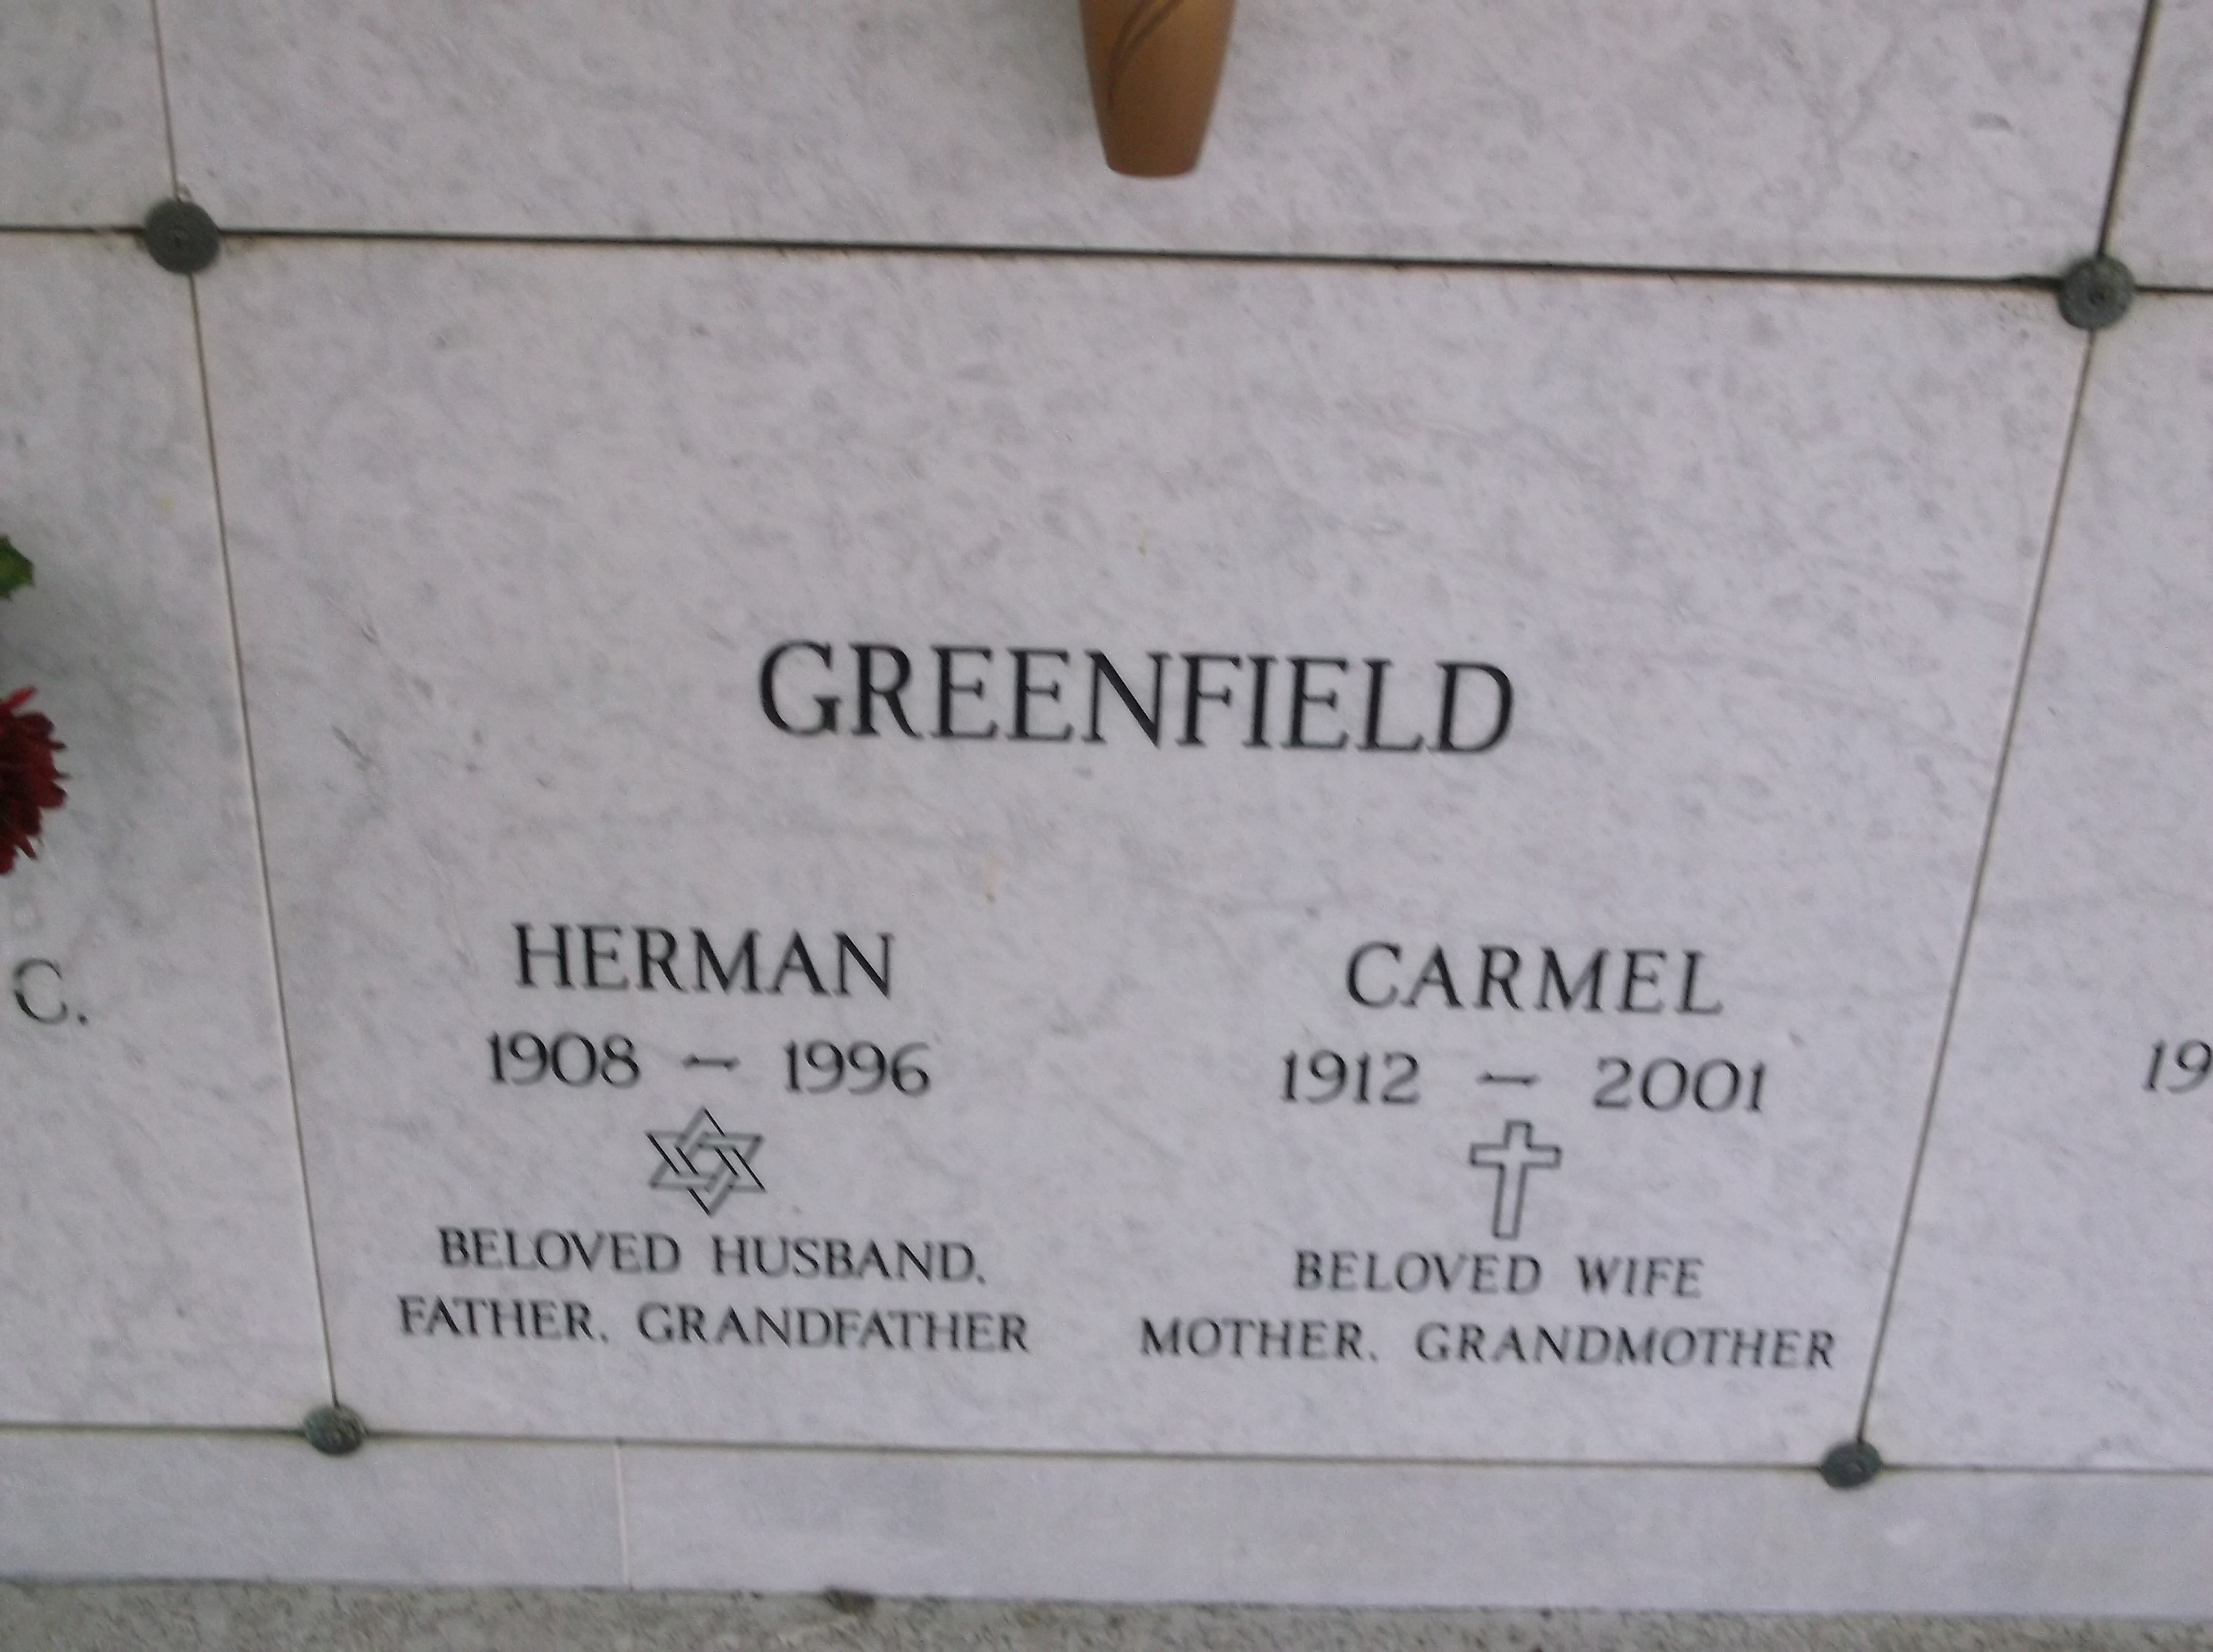 Carmel Greenfield